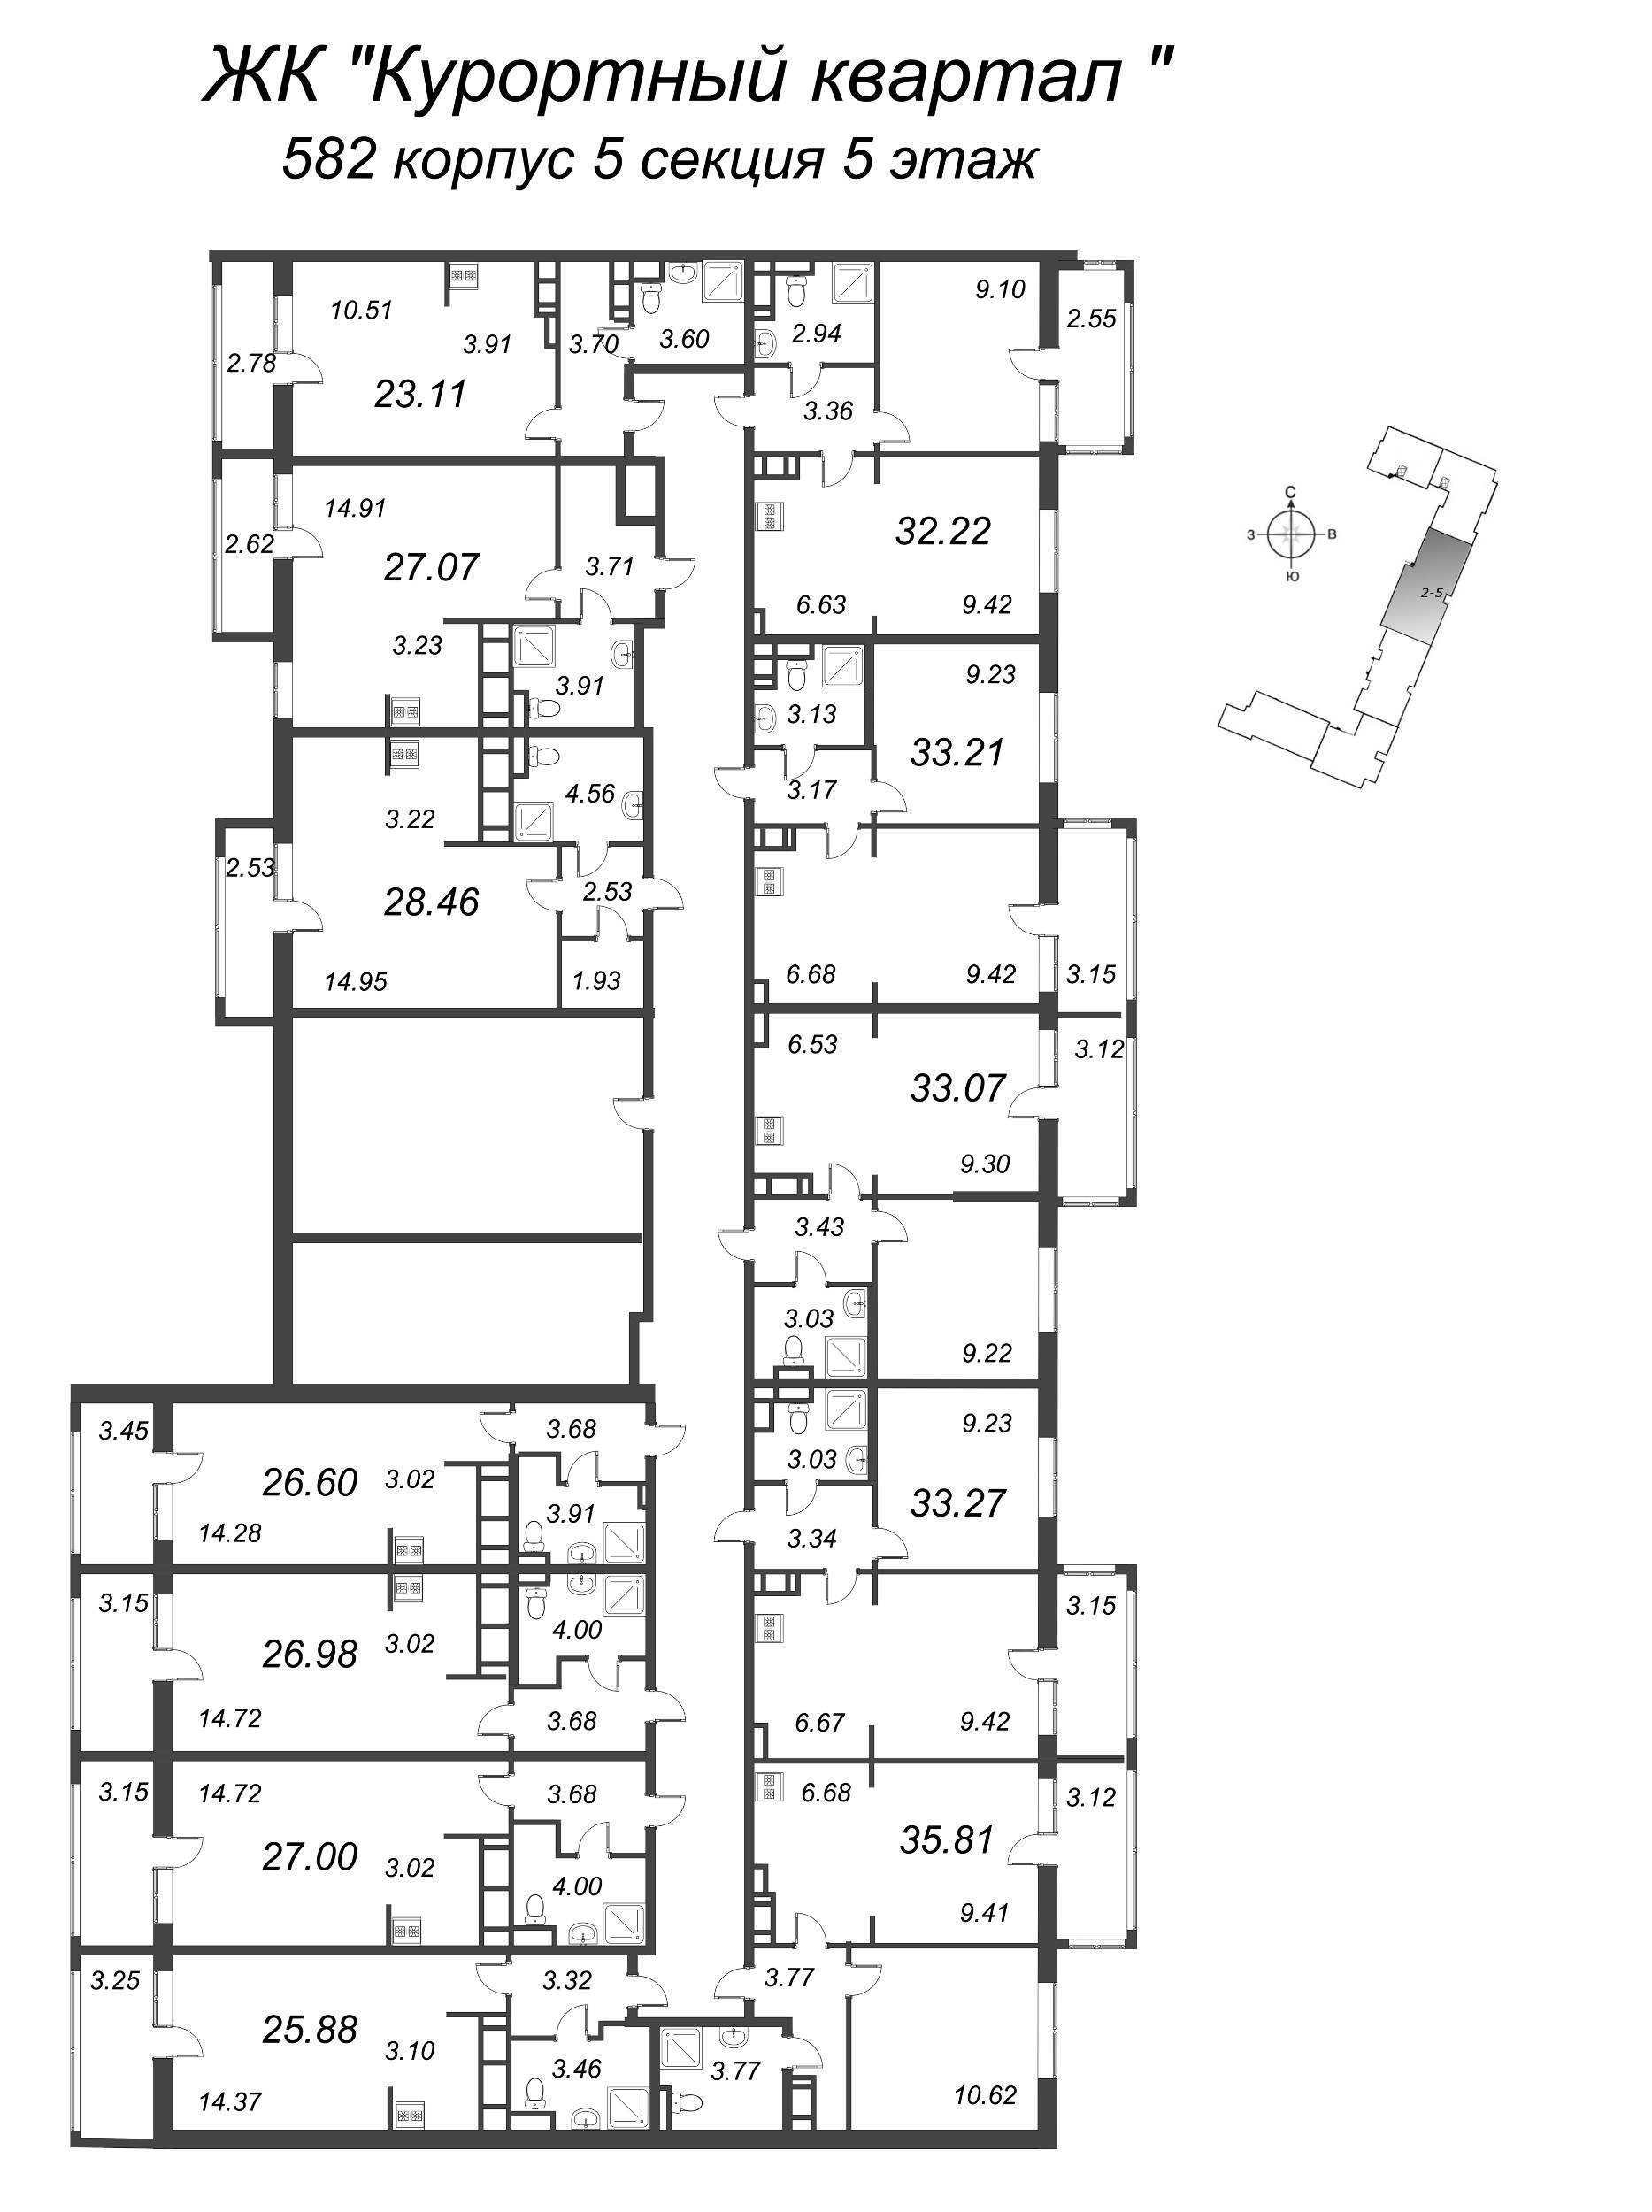 2-комнатная (Евро) квартира, 33.07 м² - планировка этажа